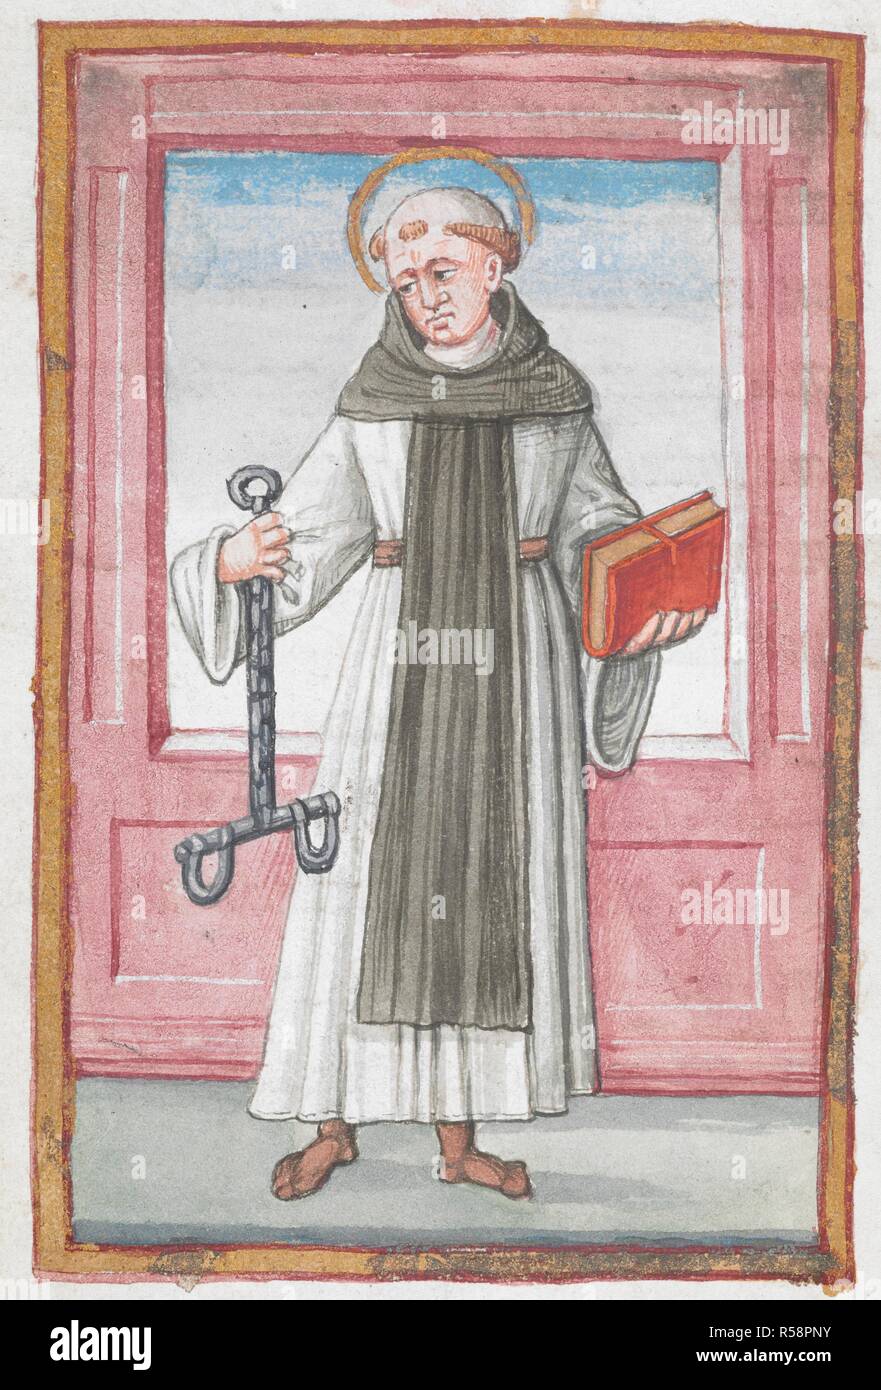 Saint Leonard. Prayer book of Sigismund I of Poland. Prayers and suffrages. Early 17th century. Source: Add. 15281 f.214v. Language: Latin and Italian. Stock Photo